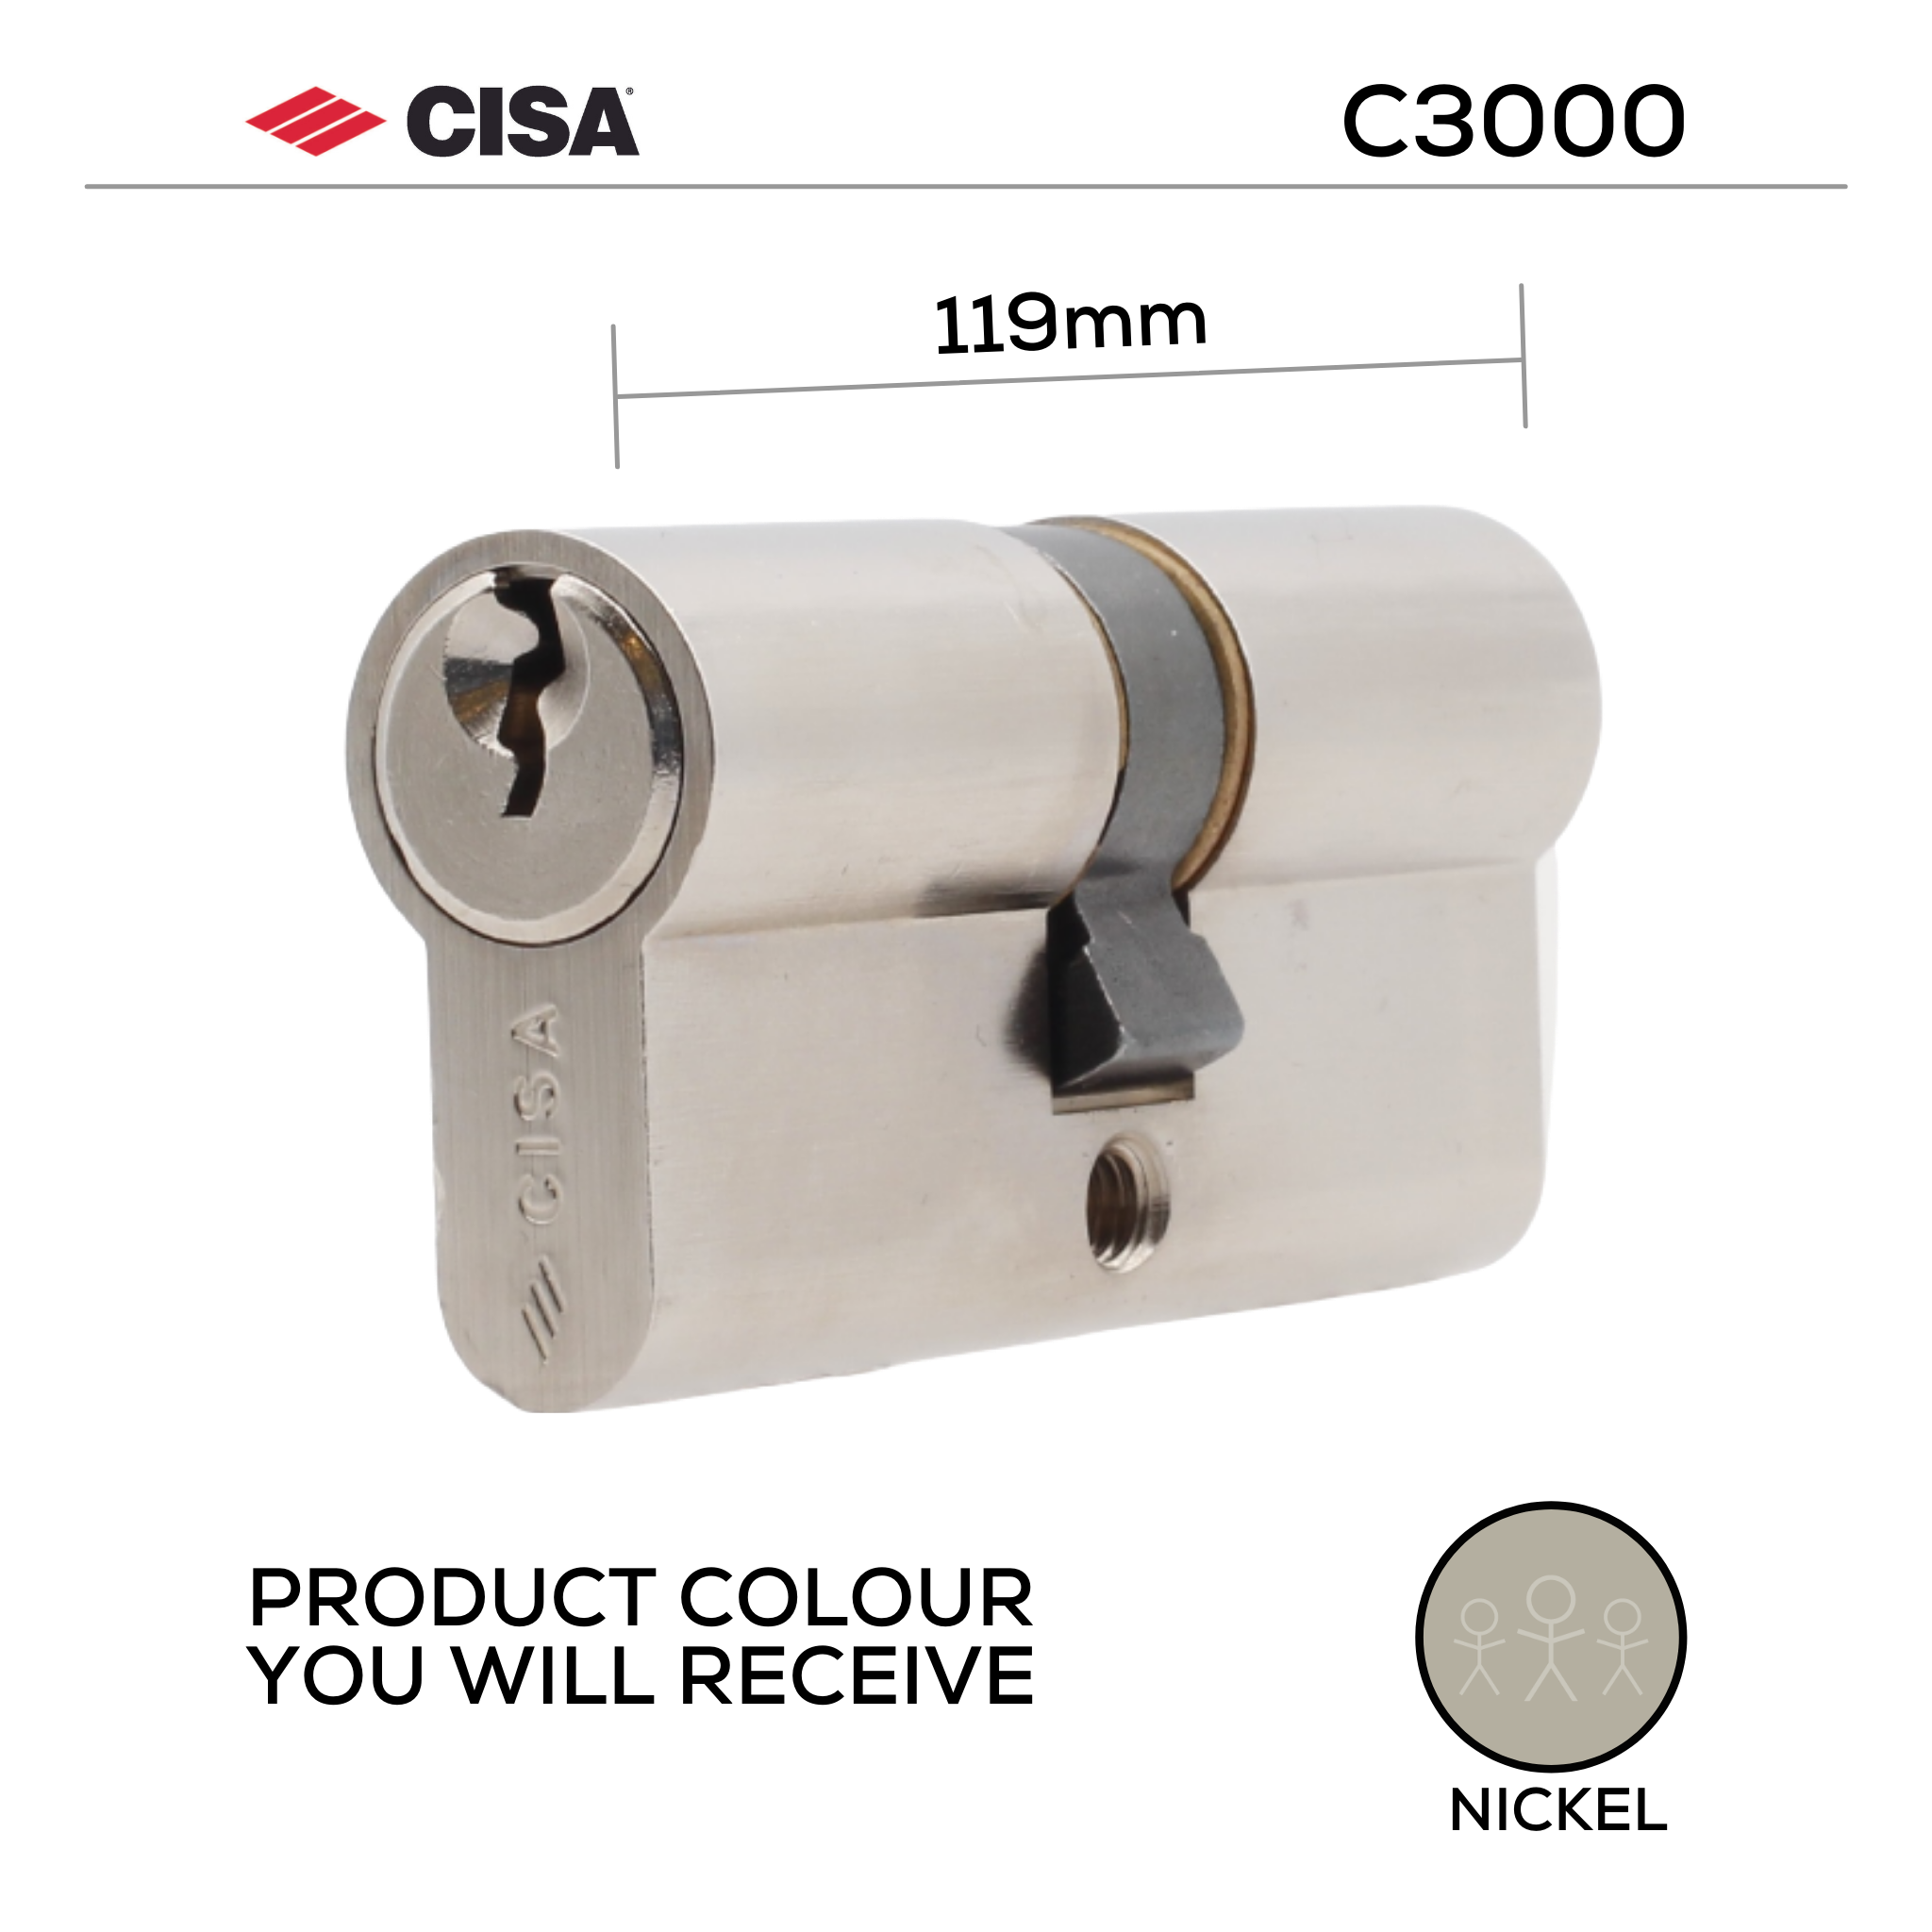 0N310-40-12-KD, 119mm - 59.5/59.5, Double Cylinder, C3000, Key to Key, Keyed to Differ (Standard), 3 Keys, 6 Pin, Nickel, CISA